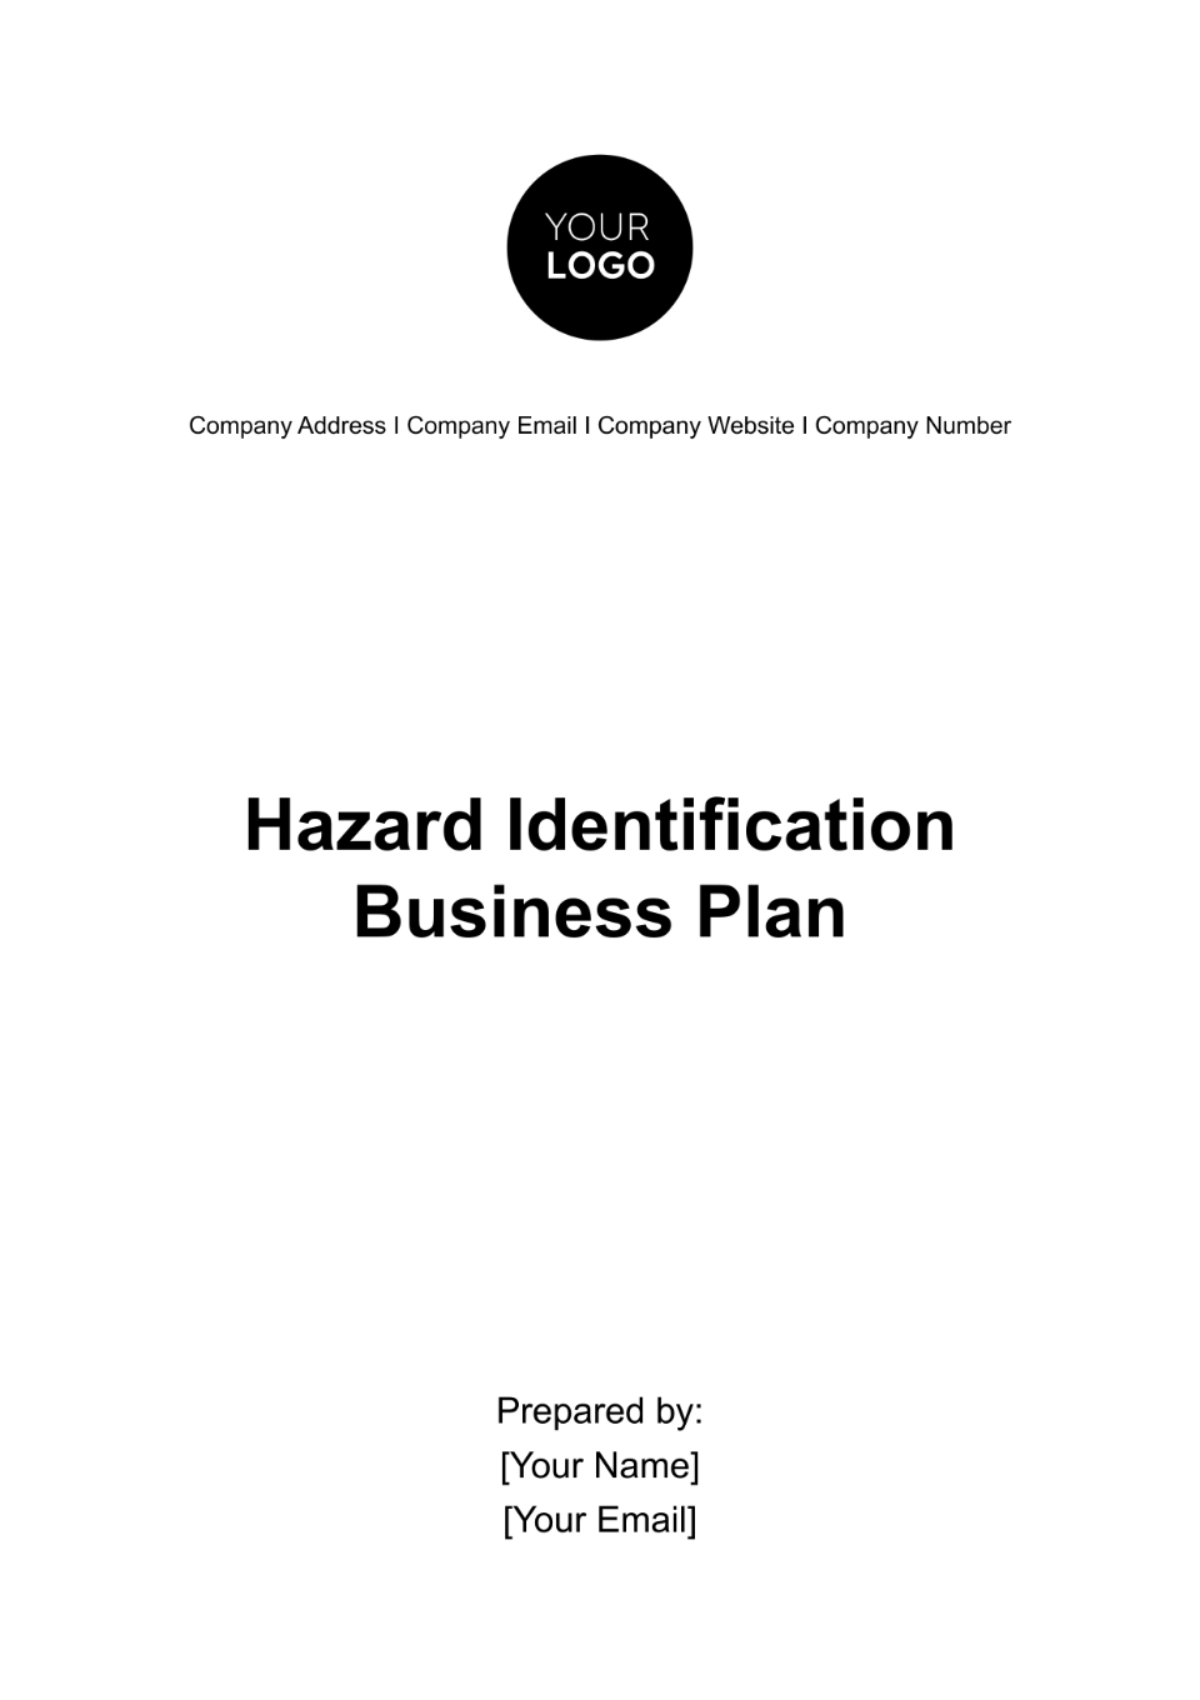 Hazard Identification Business Plan Template